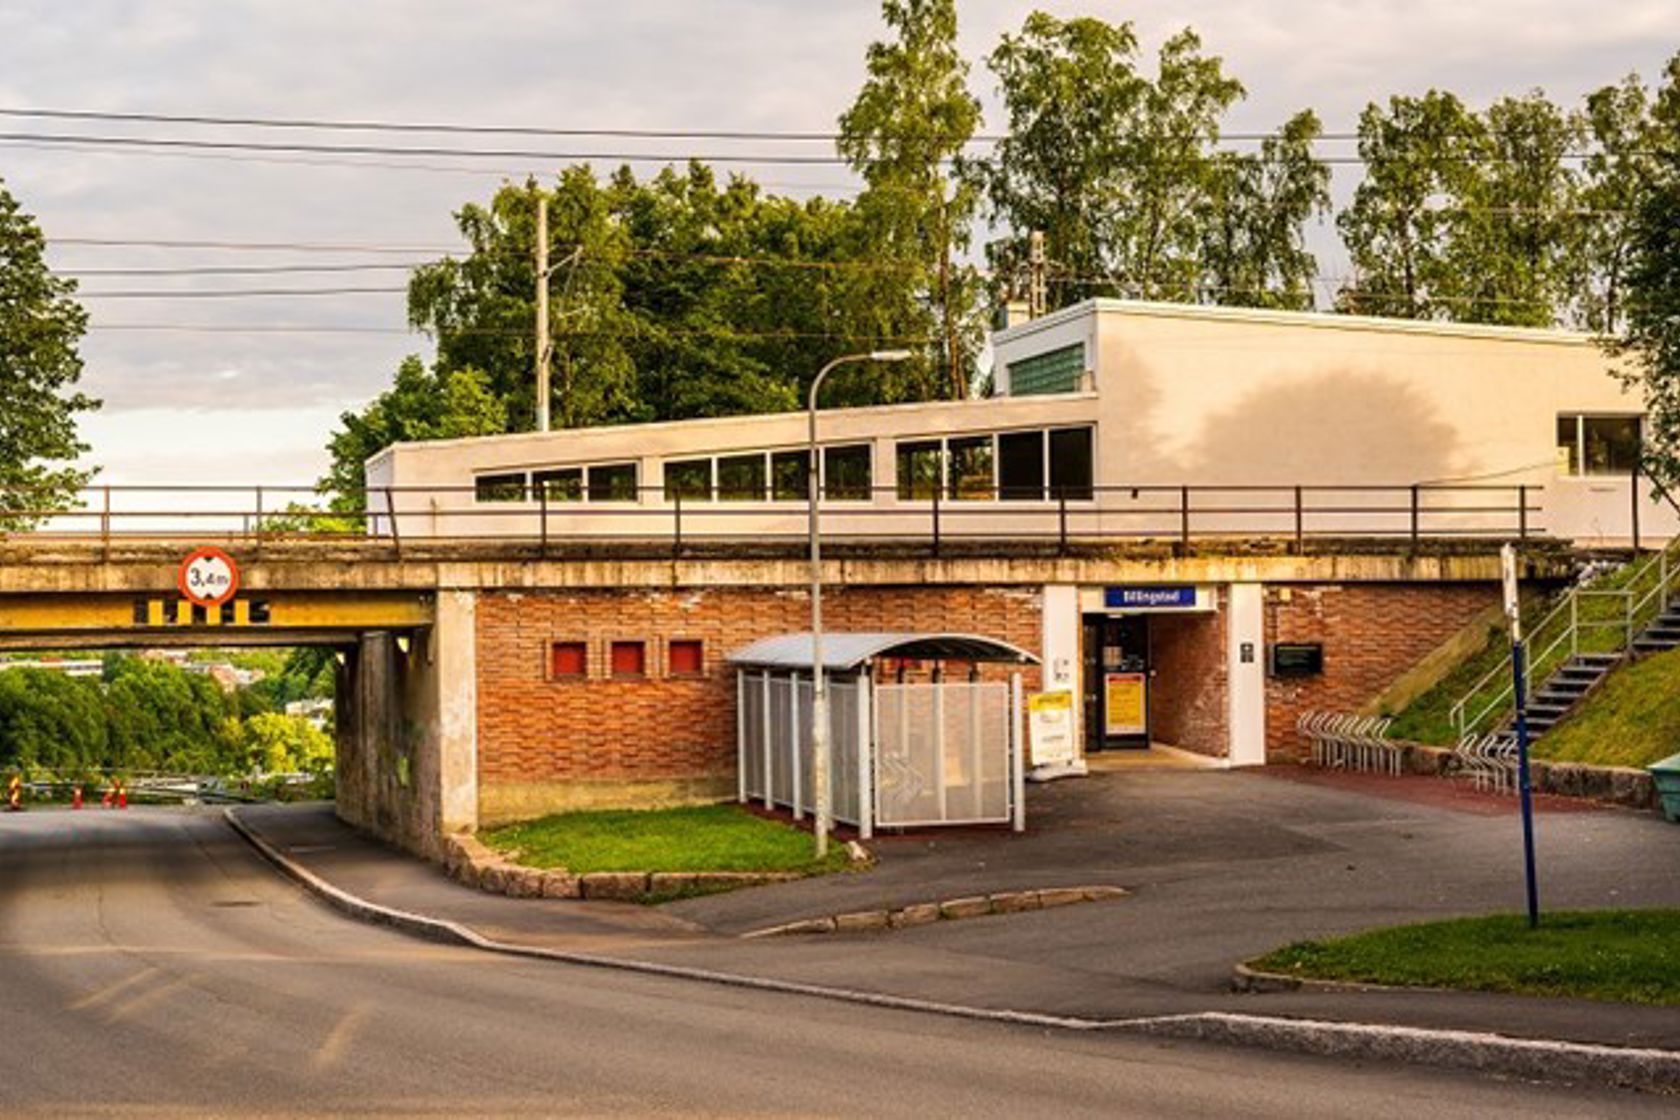 Exterior view of Billingstad station